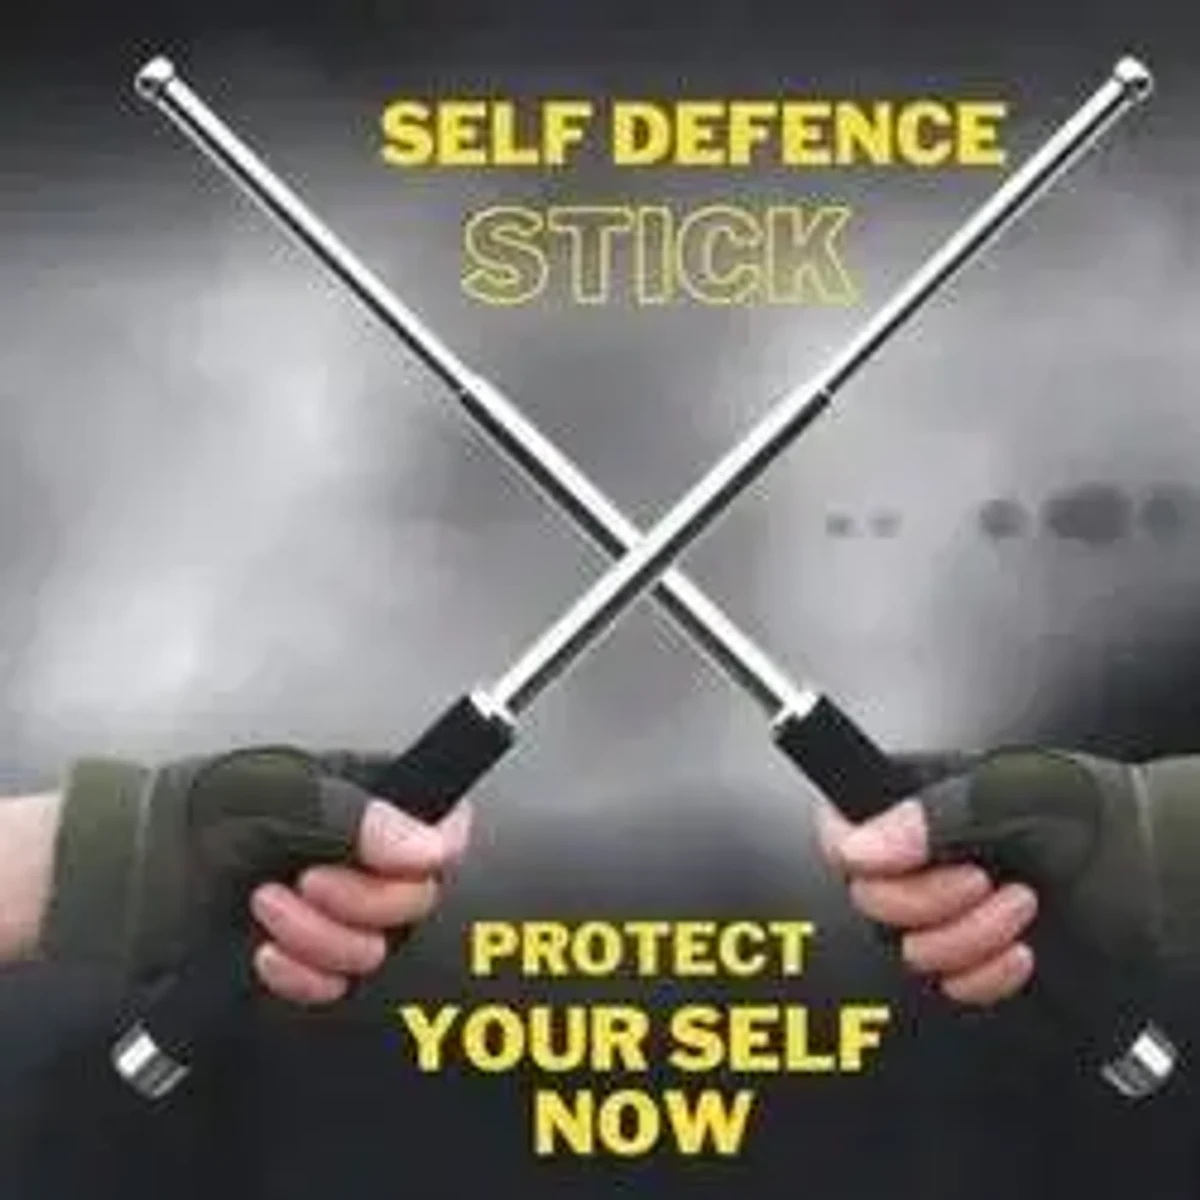 Self Defense Extendable Stick